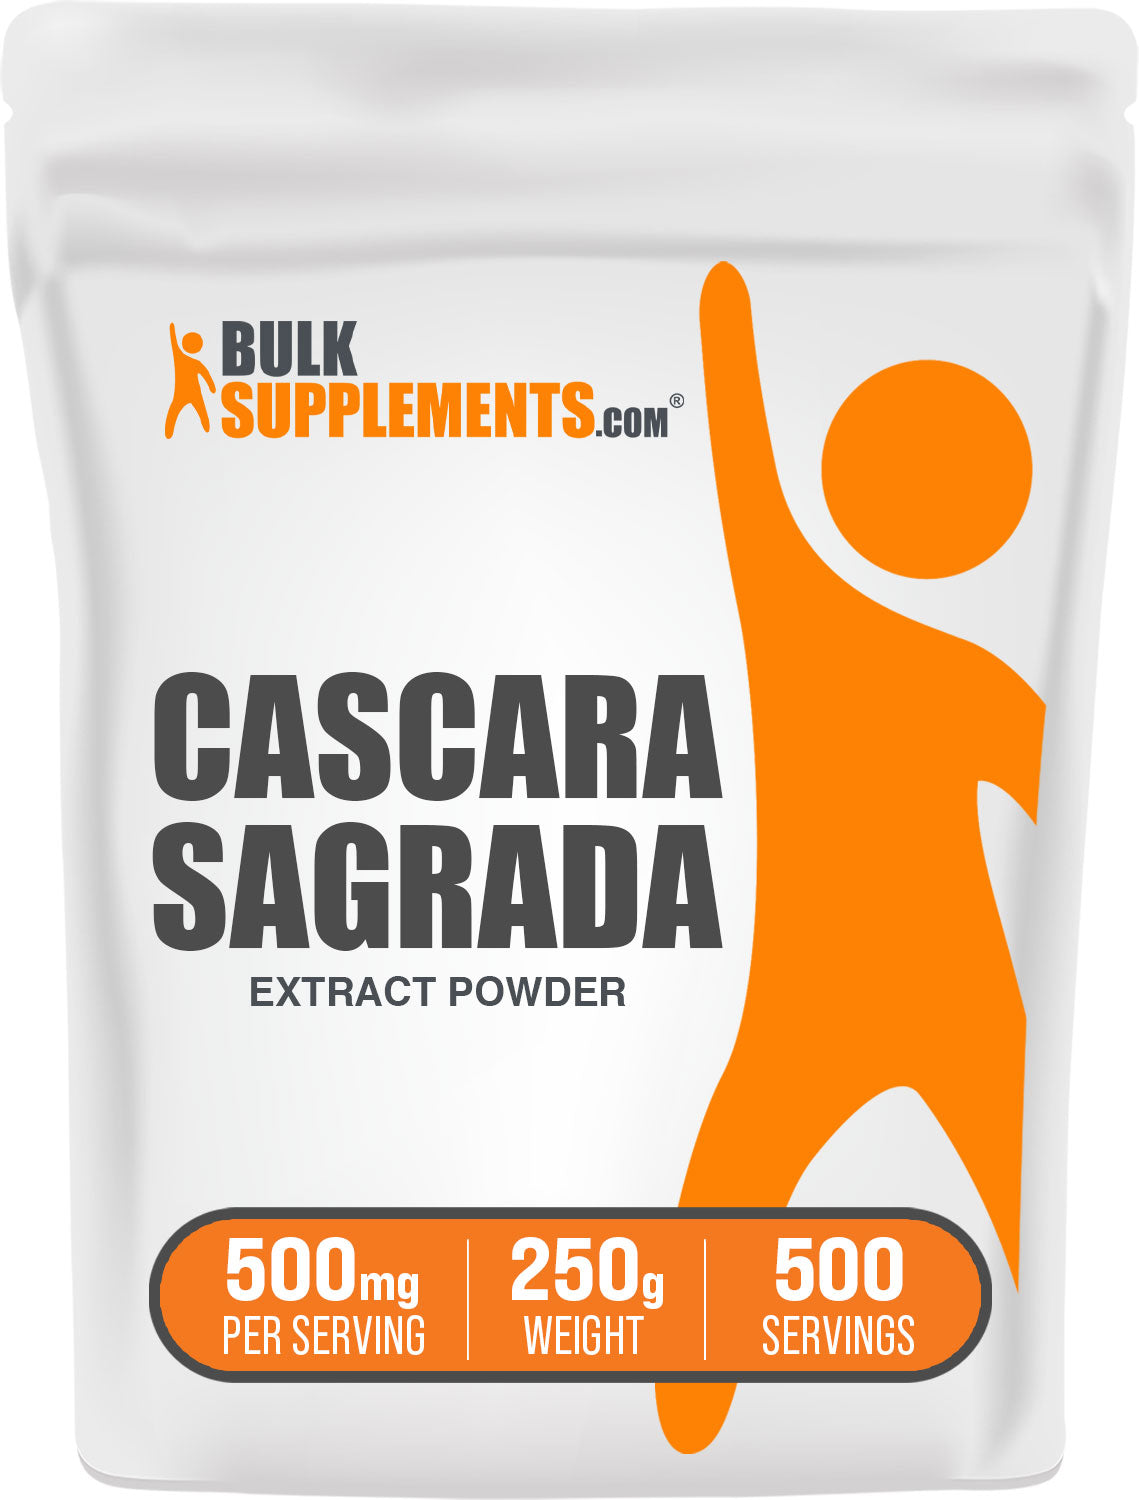 250g of cascara sagrada